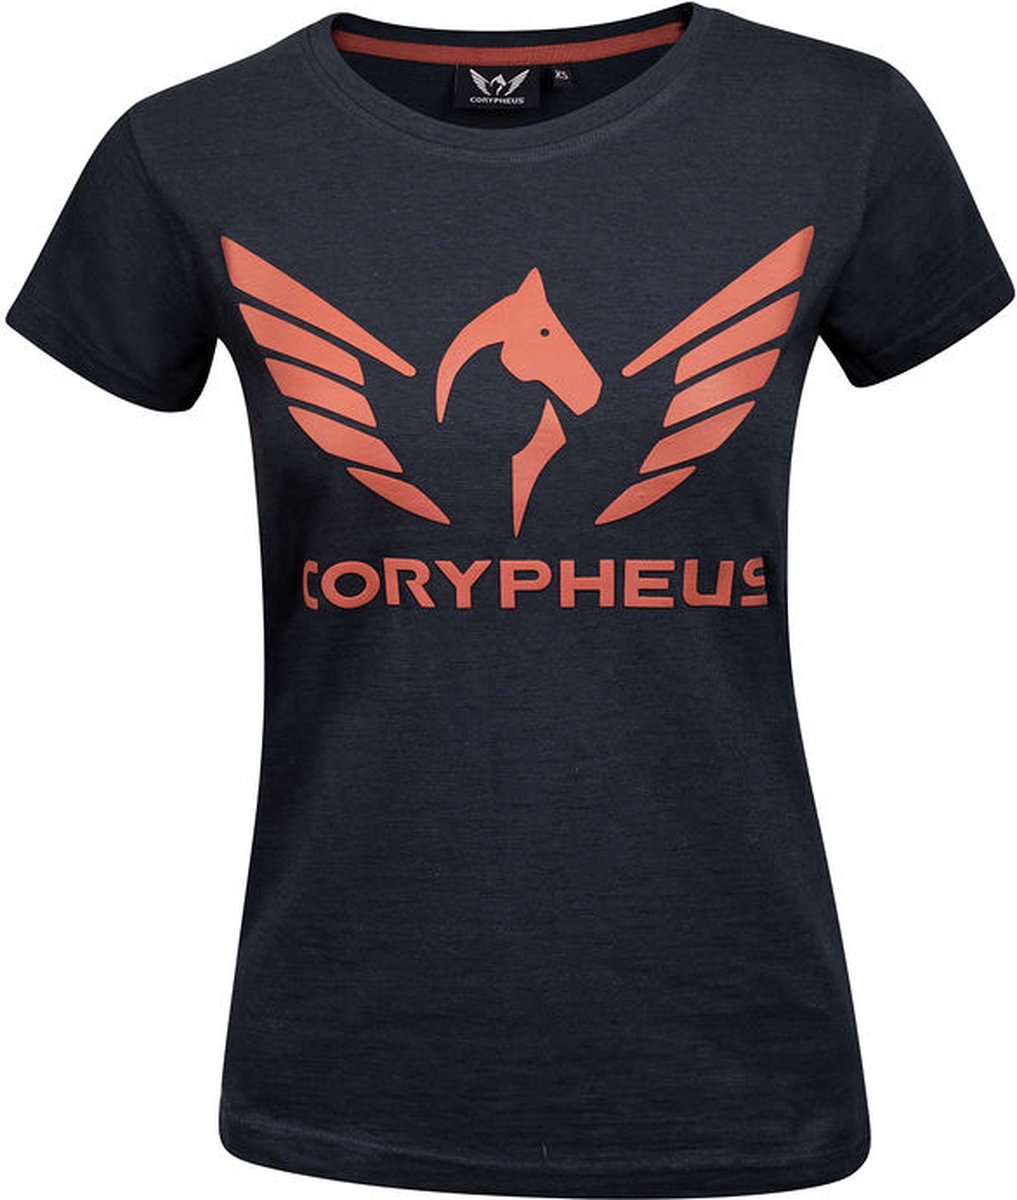 Corypheus Antracite Women's T-Shirt - XSmall